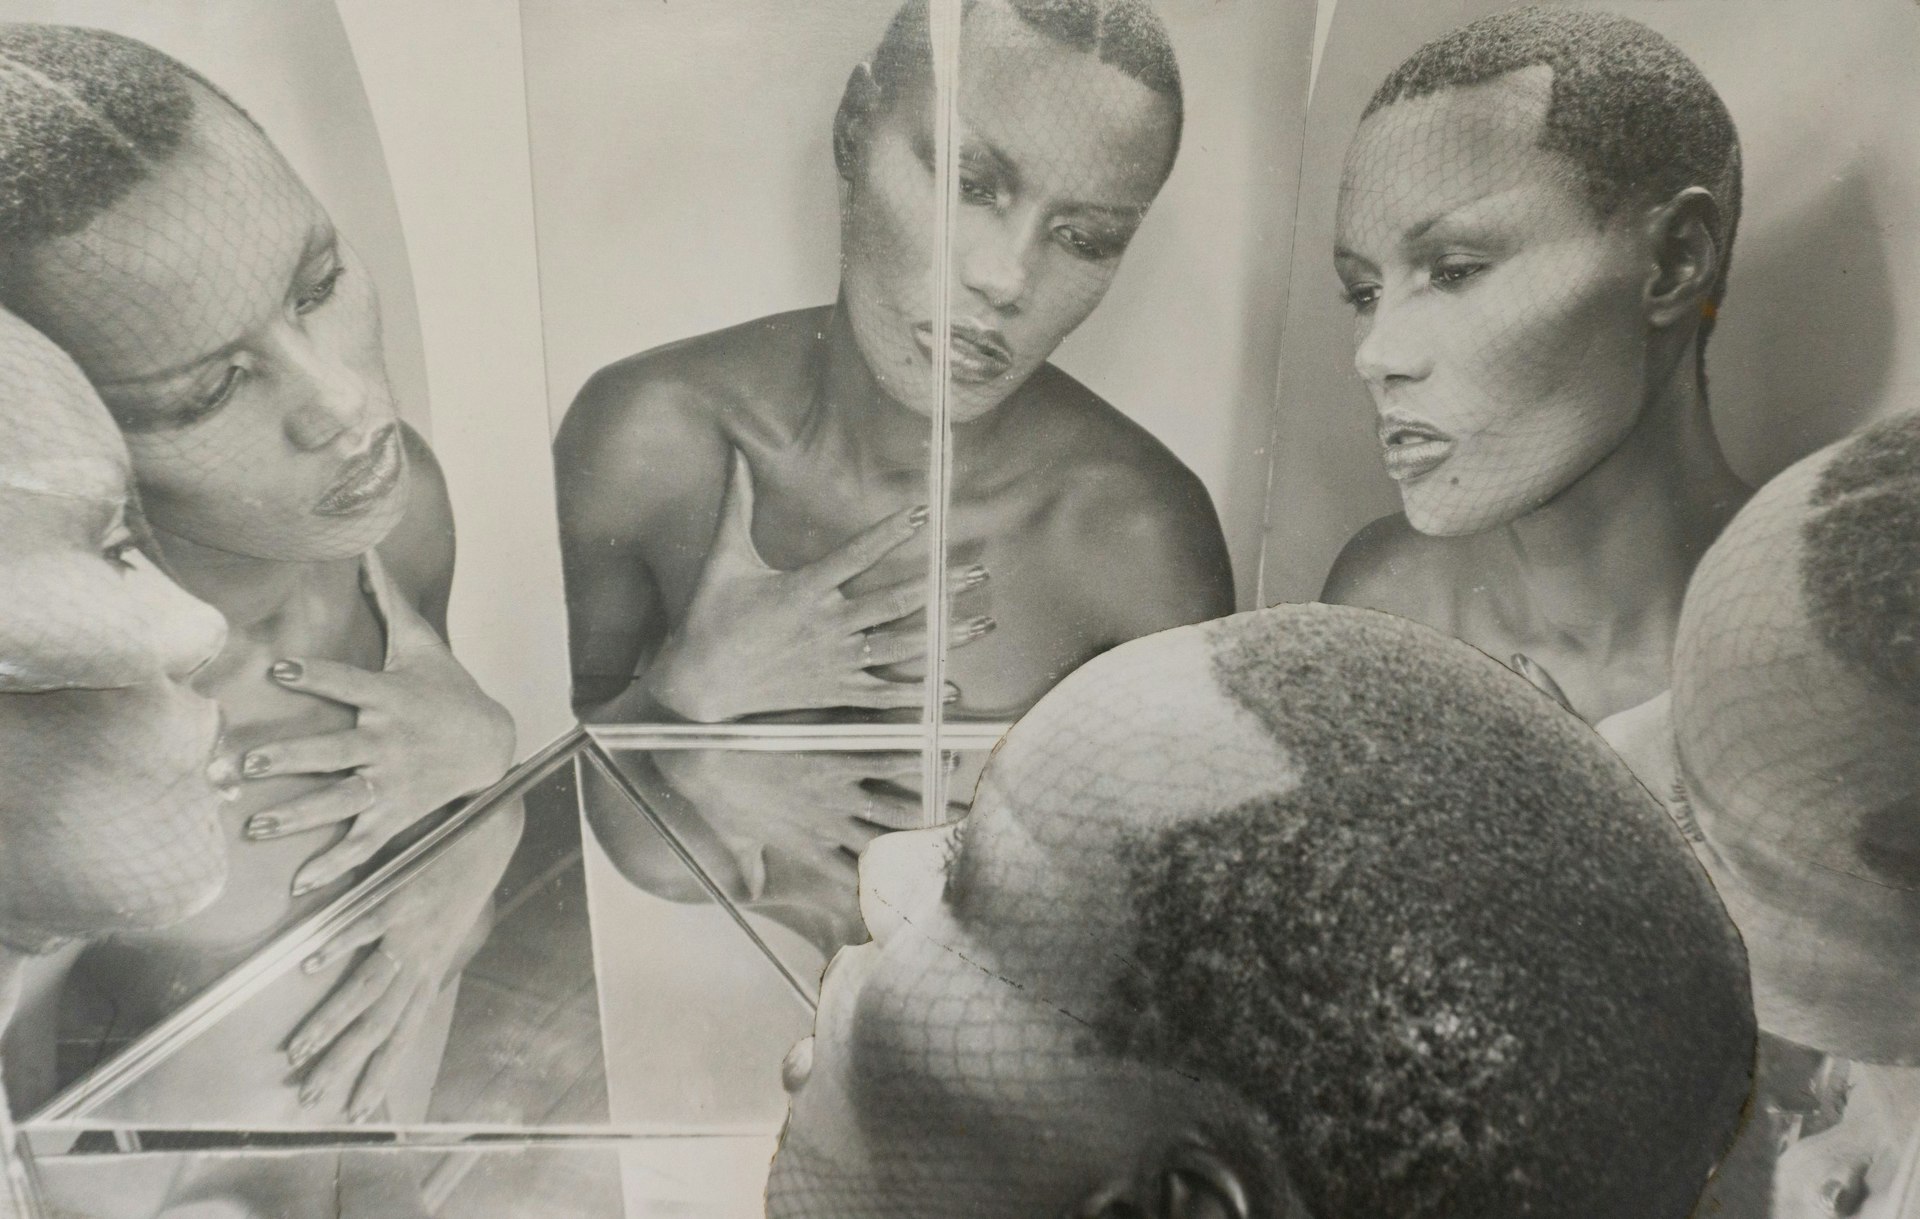 Grace Jones' pioneering gender play and Afrofuturism